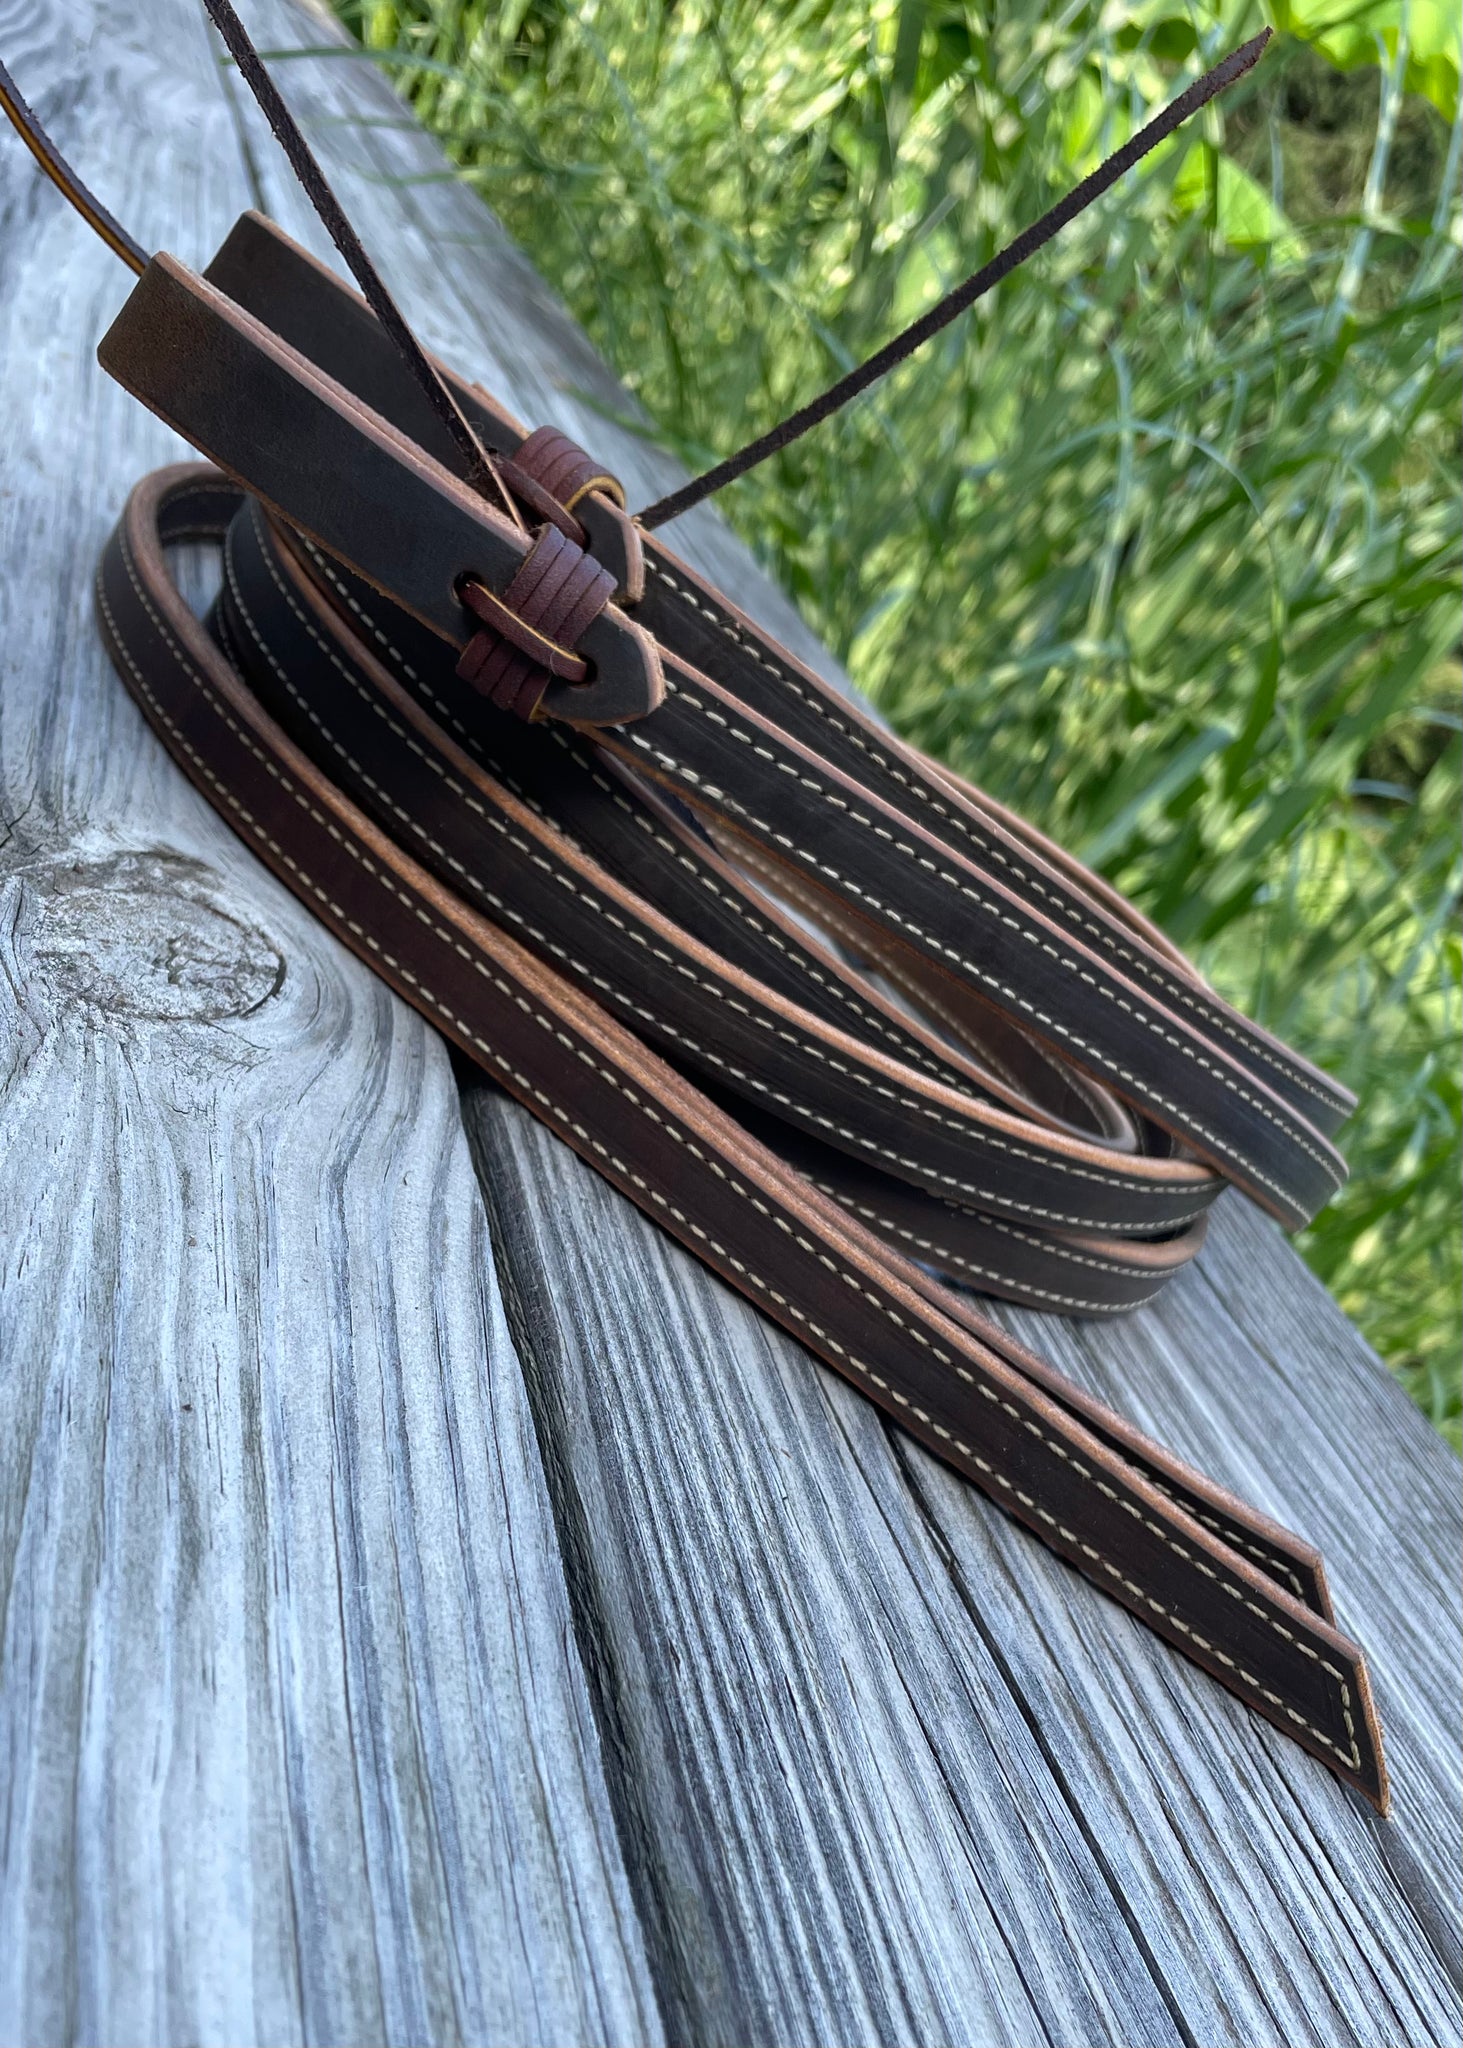 Stitched harness leather split reins